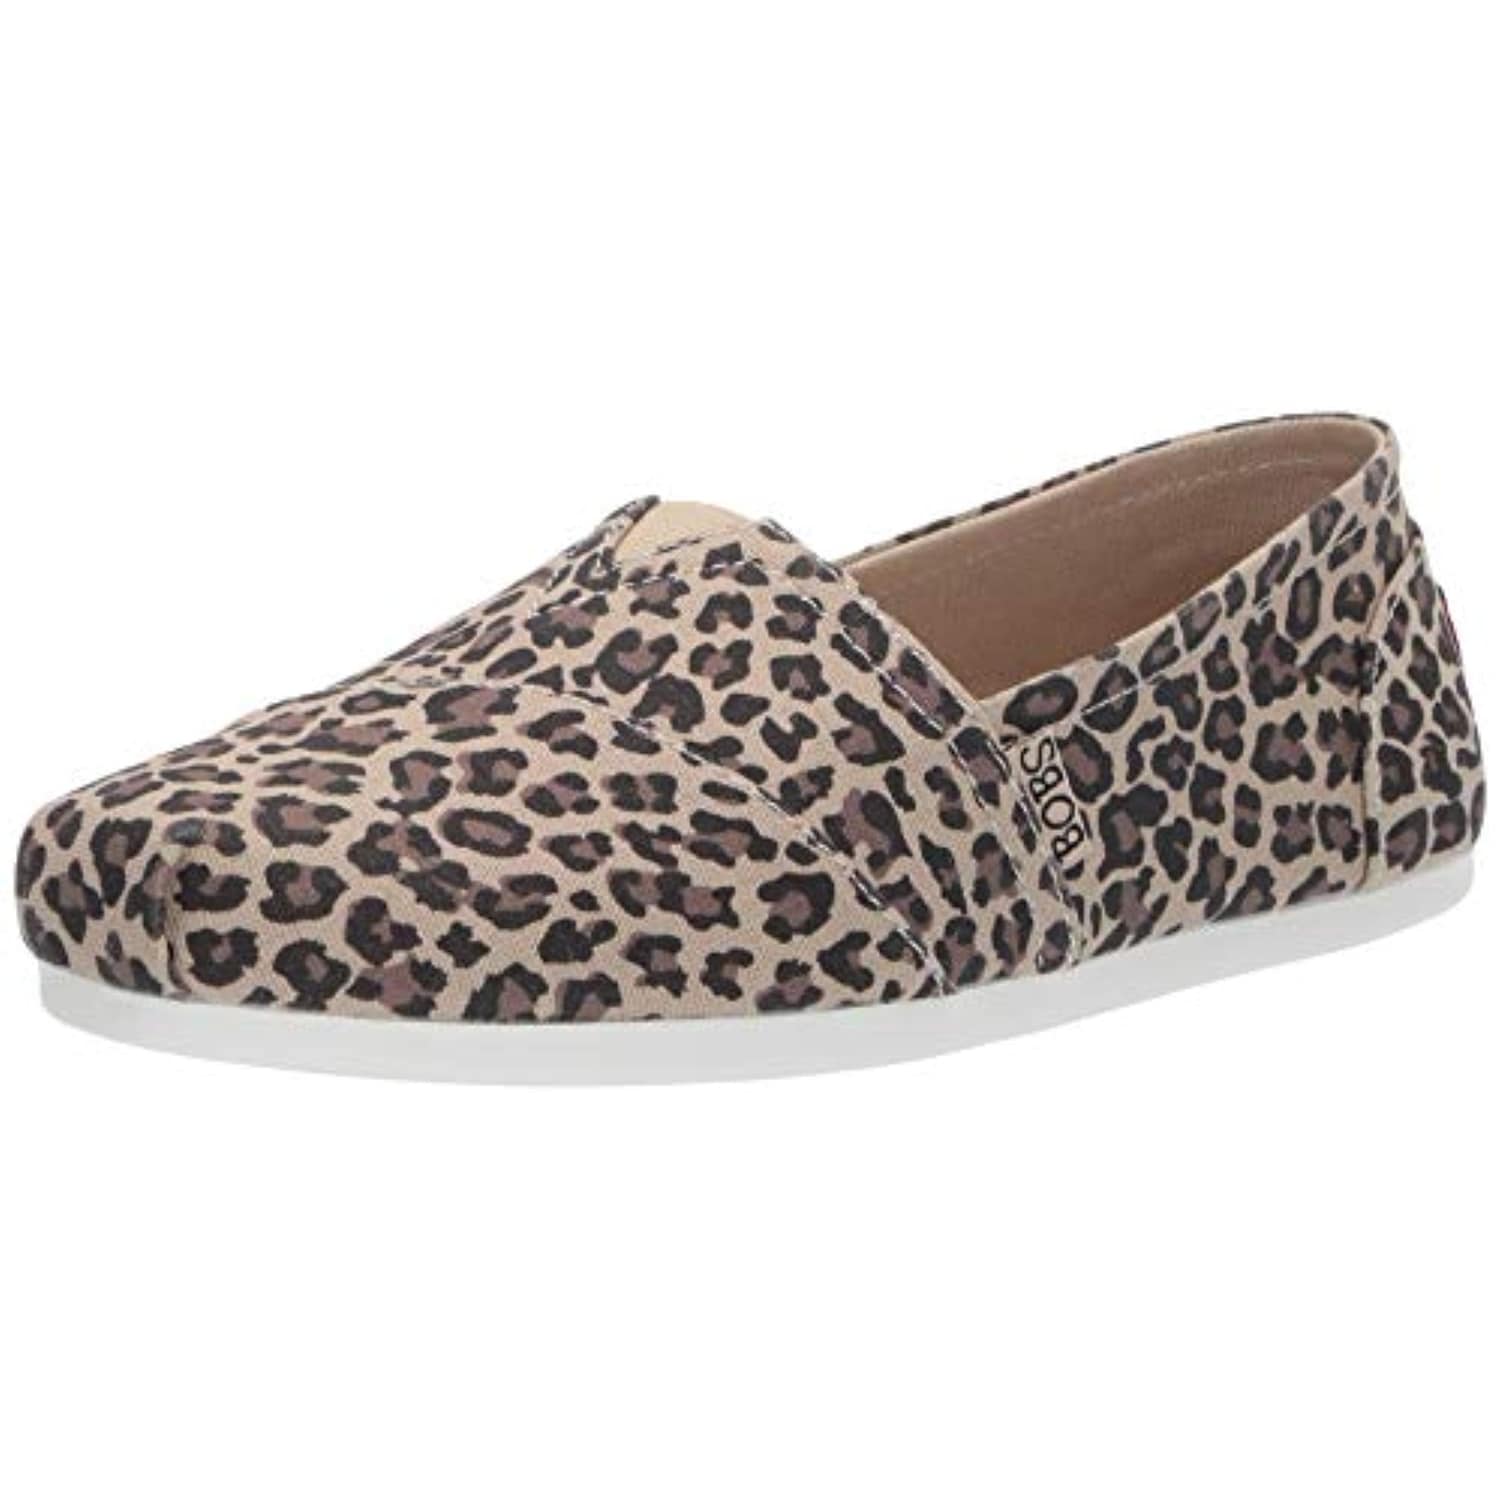 bobs shoes leopard print